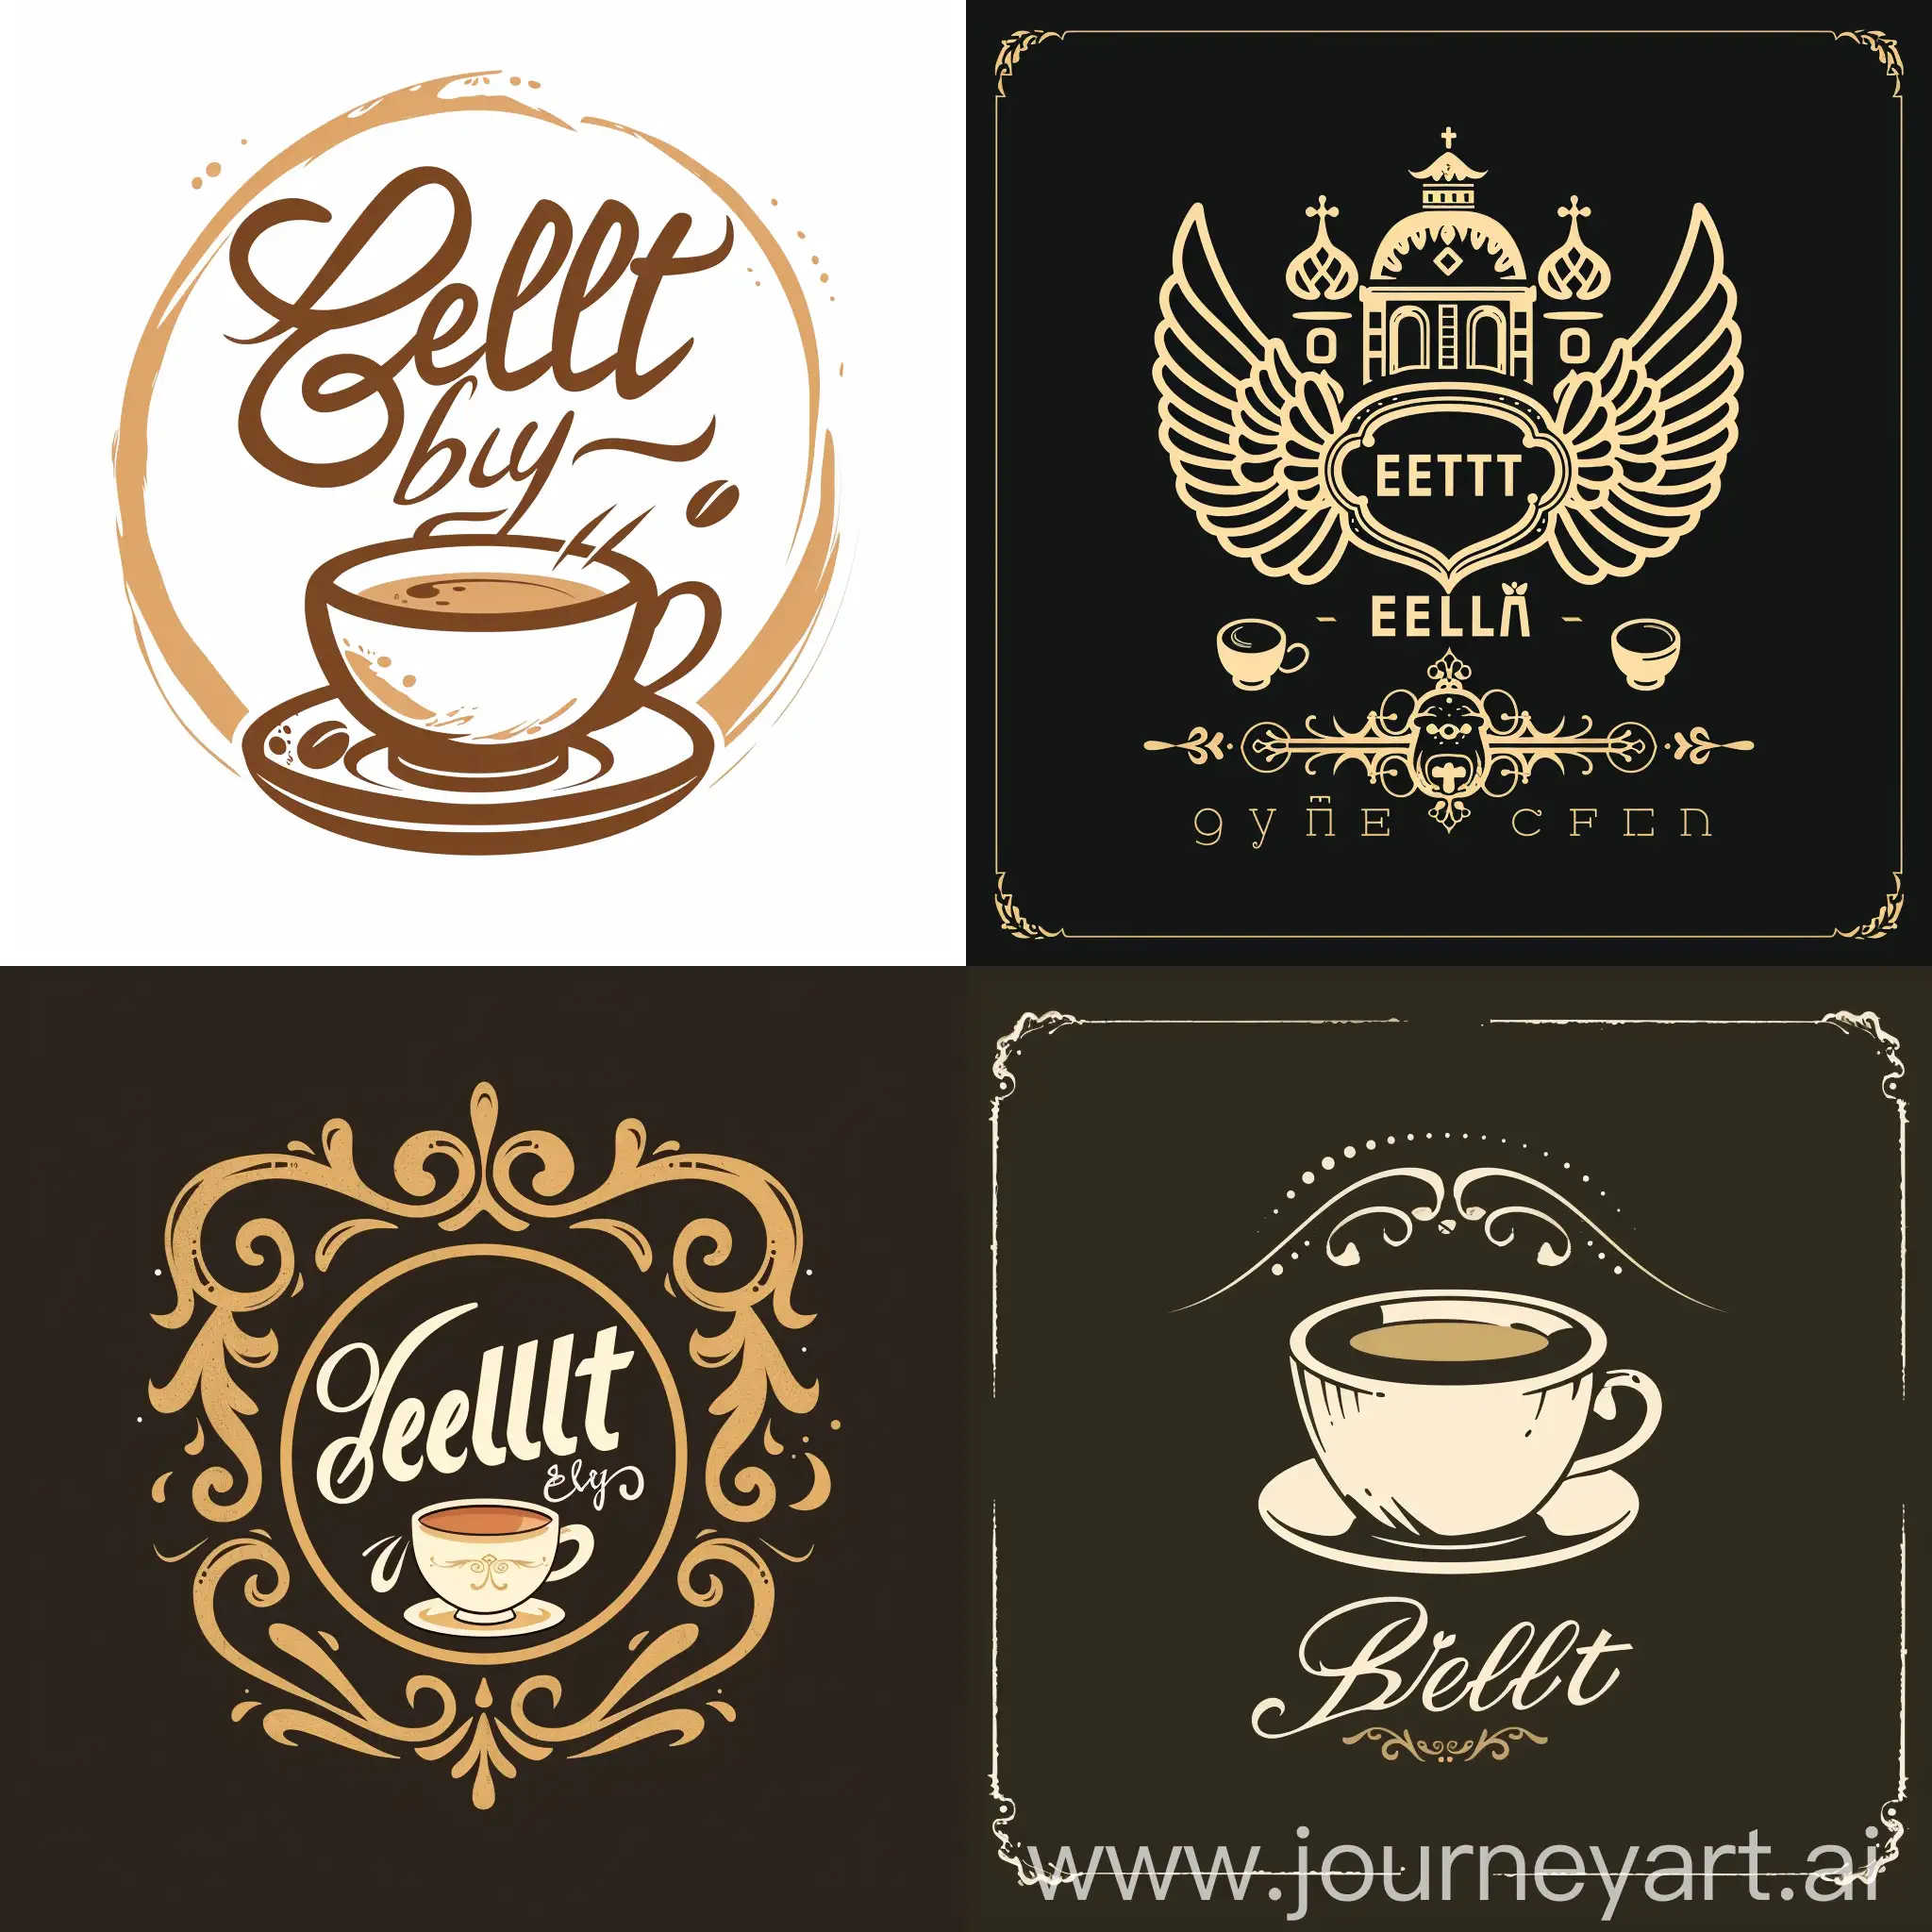 Create a logo for coffee-shop named "Спэшелти by СПб" in Saint-Petersburg style.